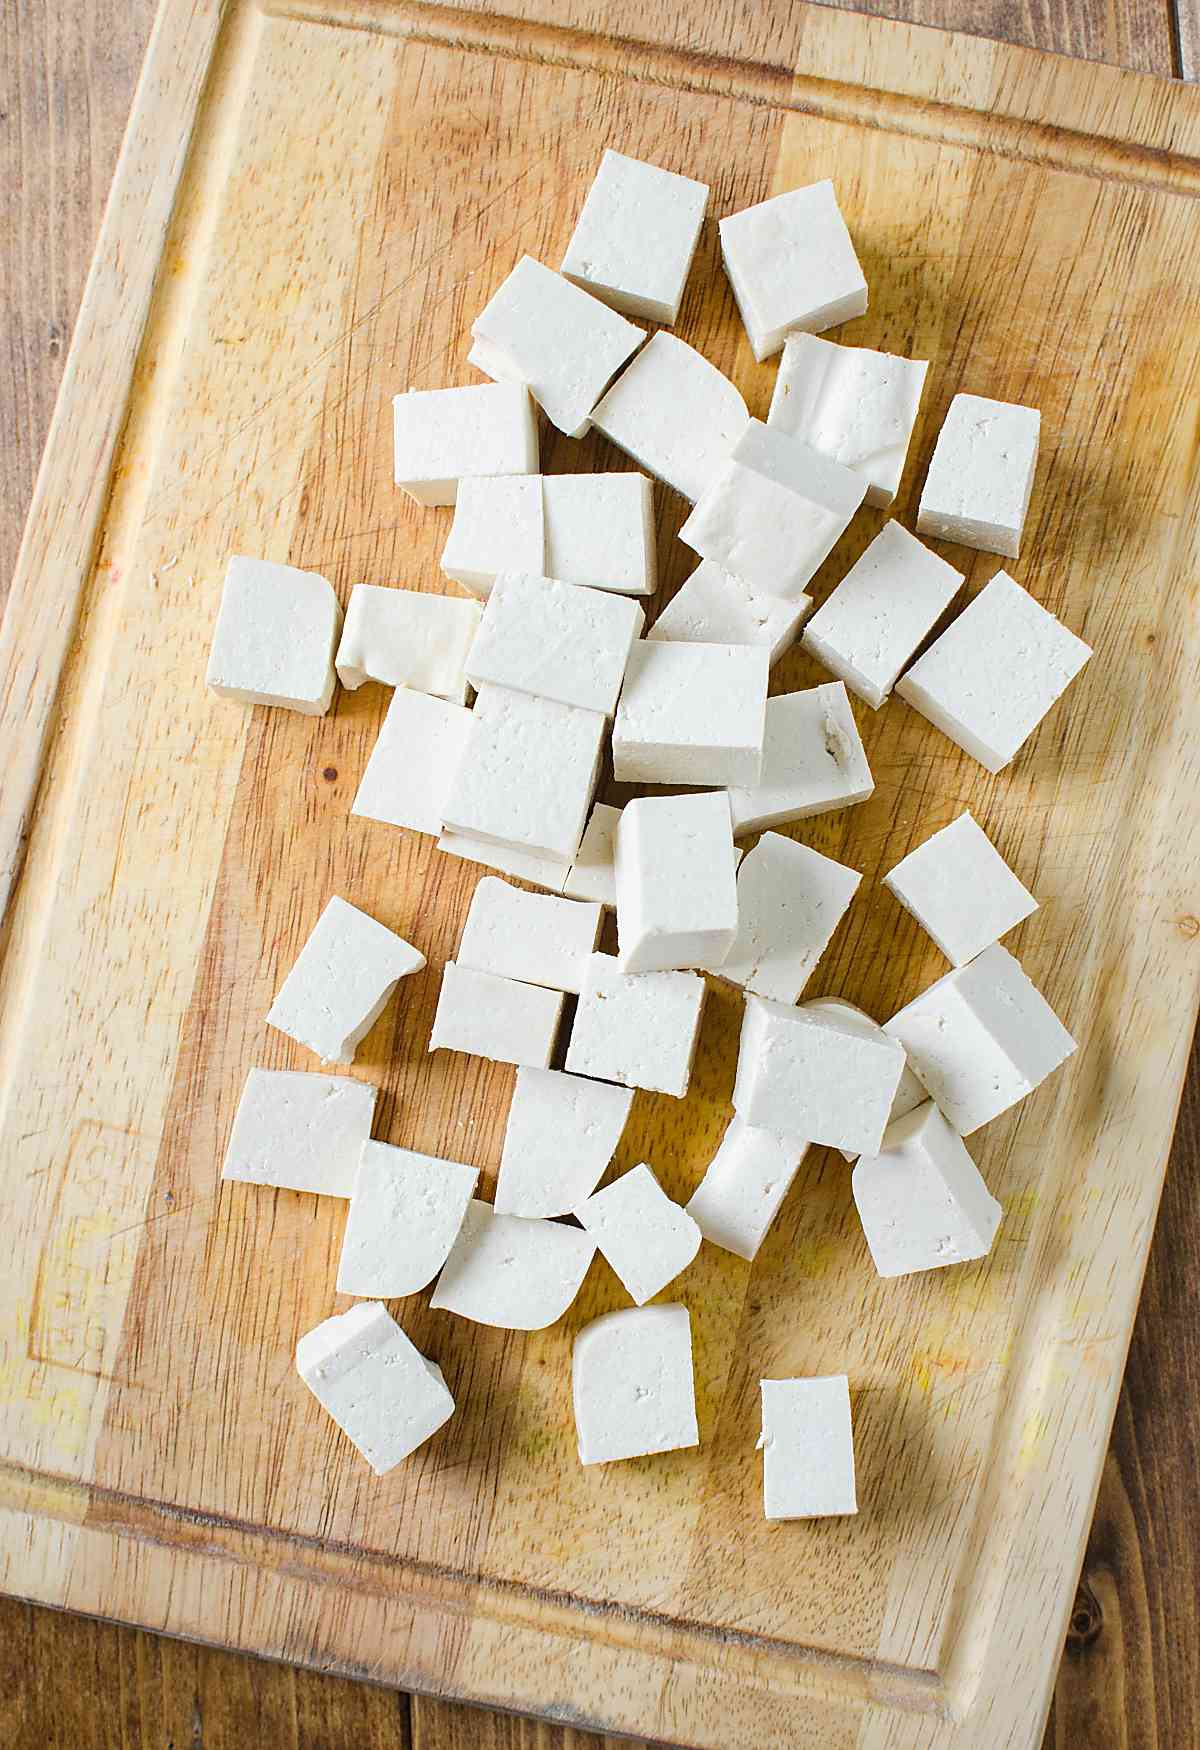 Cutting tofu into bite-size pieces for making Asian chili garlic tofu.